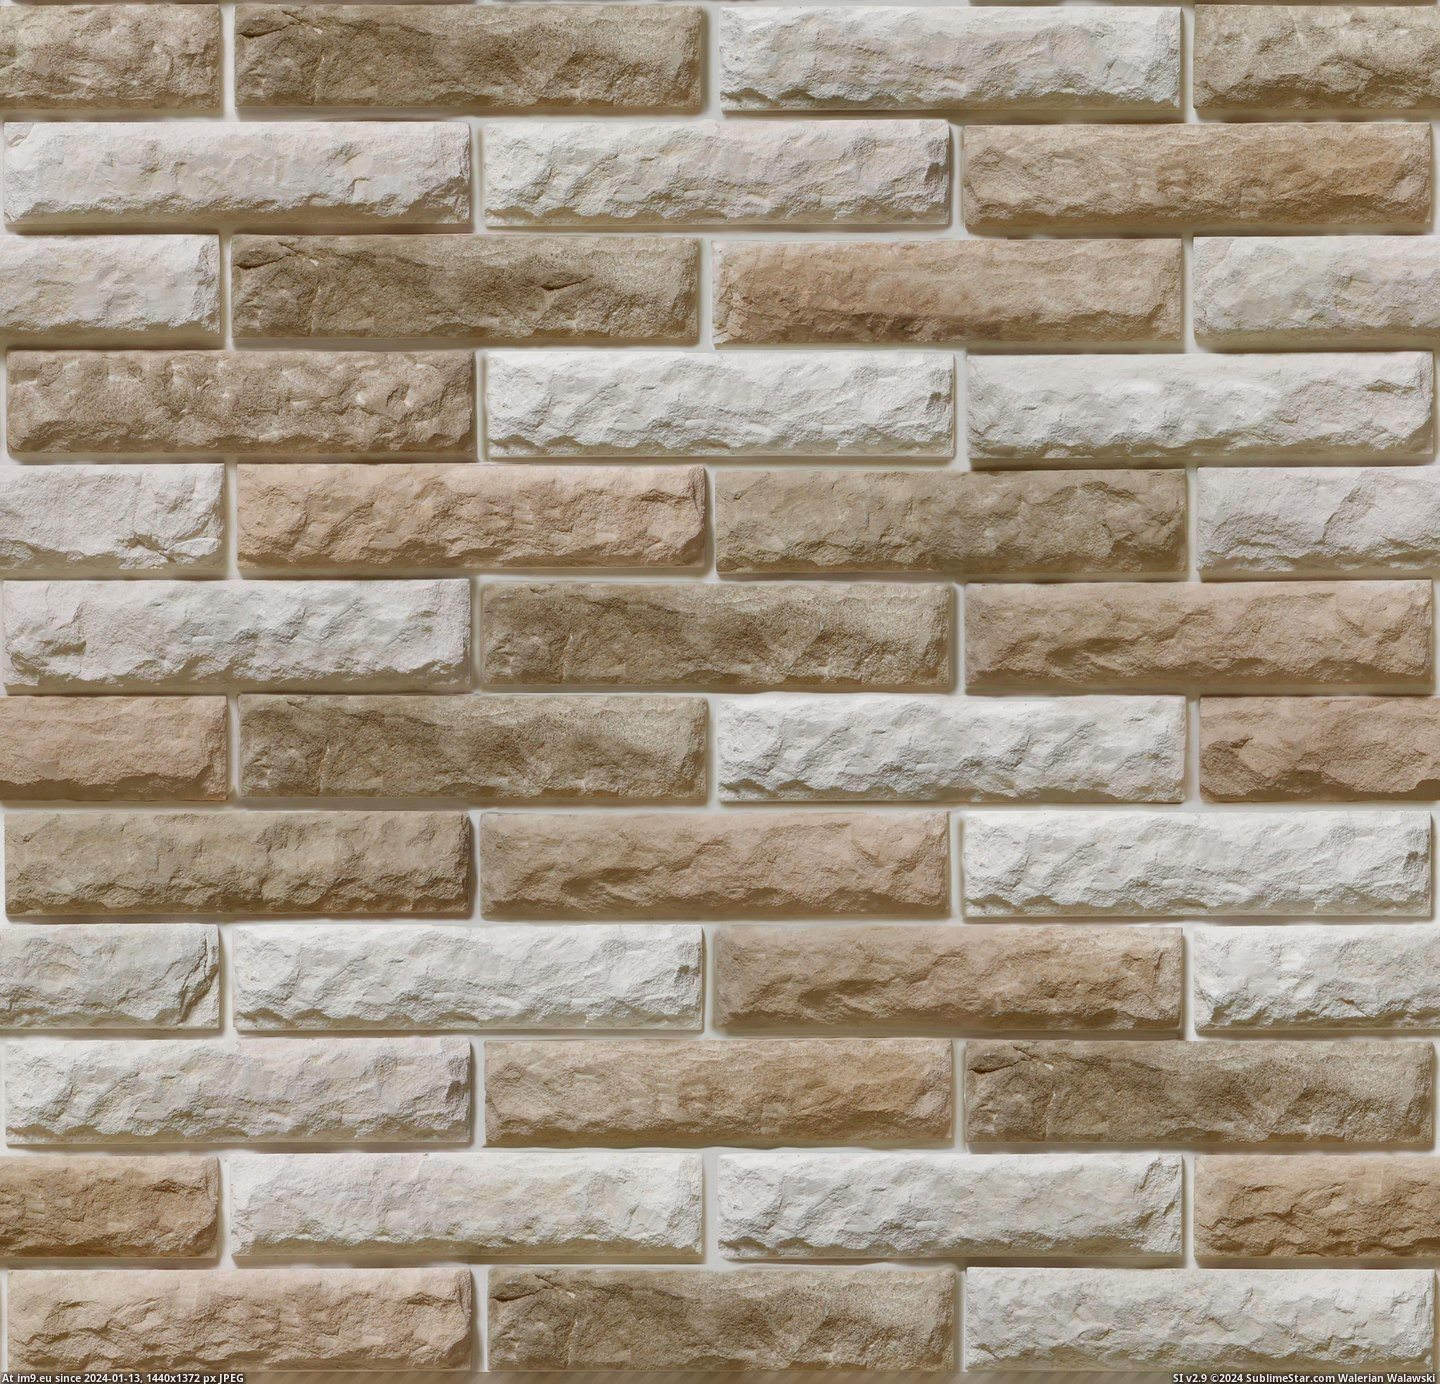 #Brick #Bristol #Texture Bristol (brick texture 1) Pic. (Изображение из альбом Brick walls textures and wallpapers))